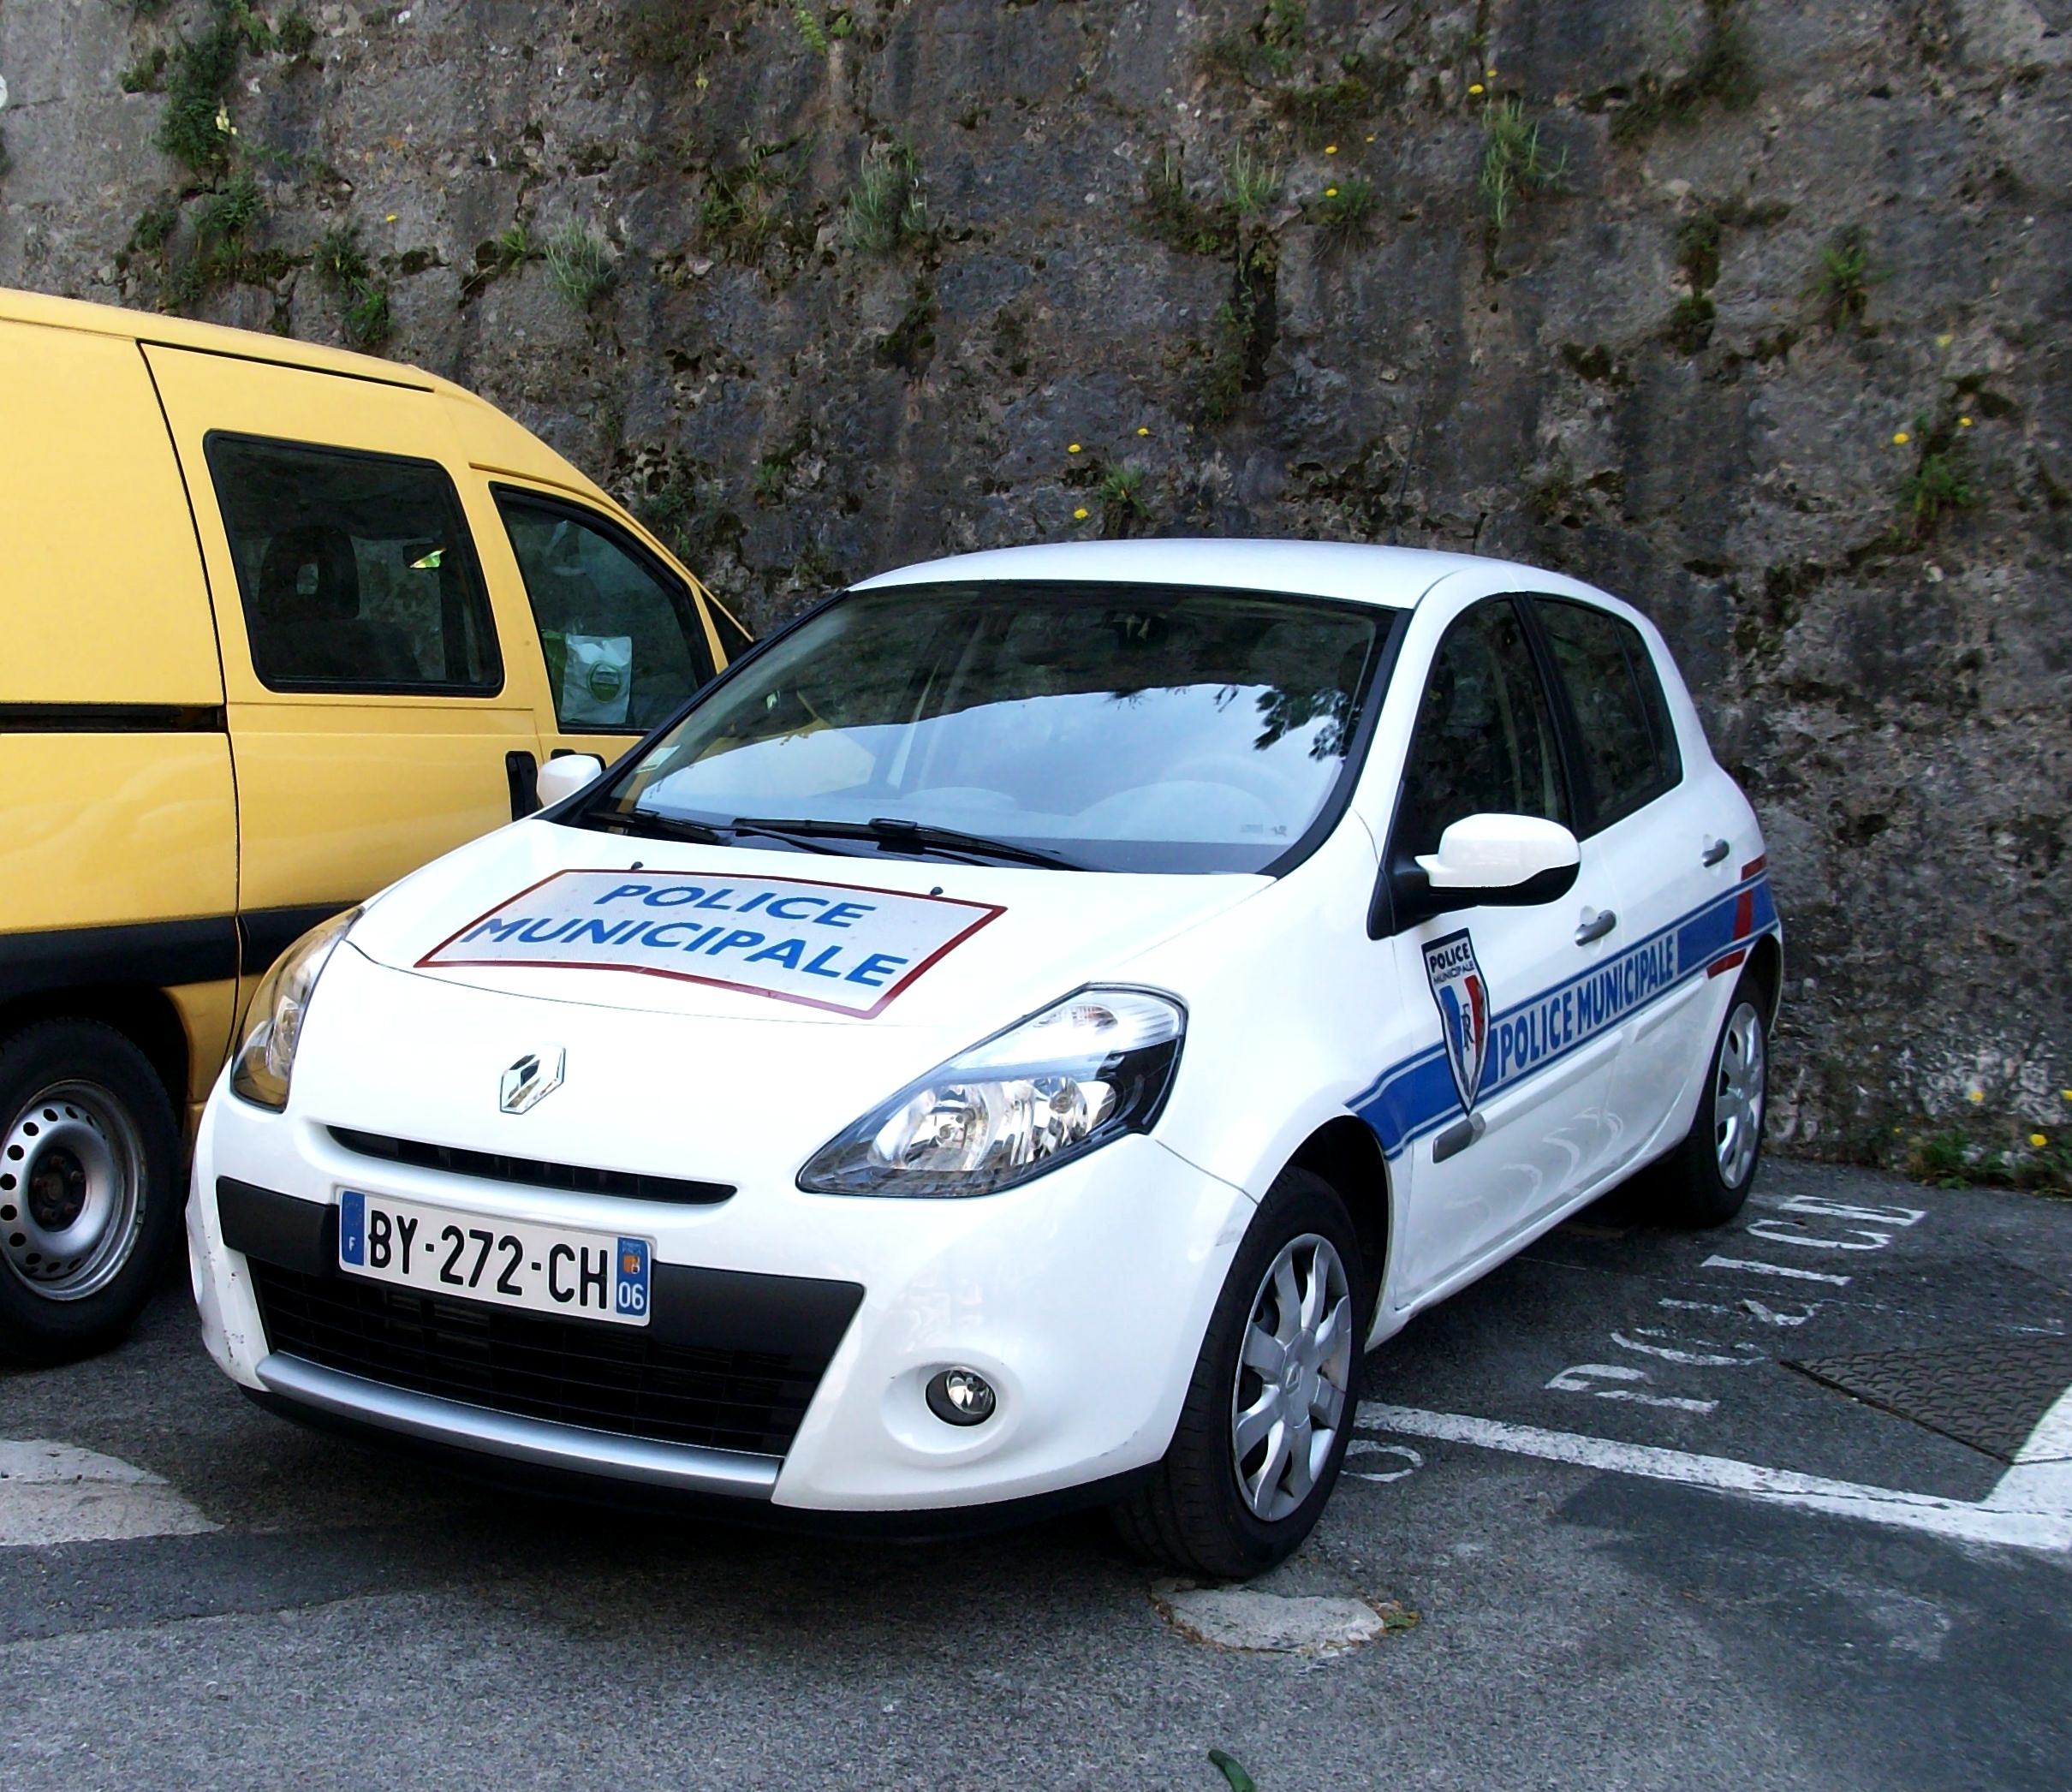 File:Renault Clio police municipale.JPG - Wikimedia Commons